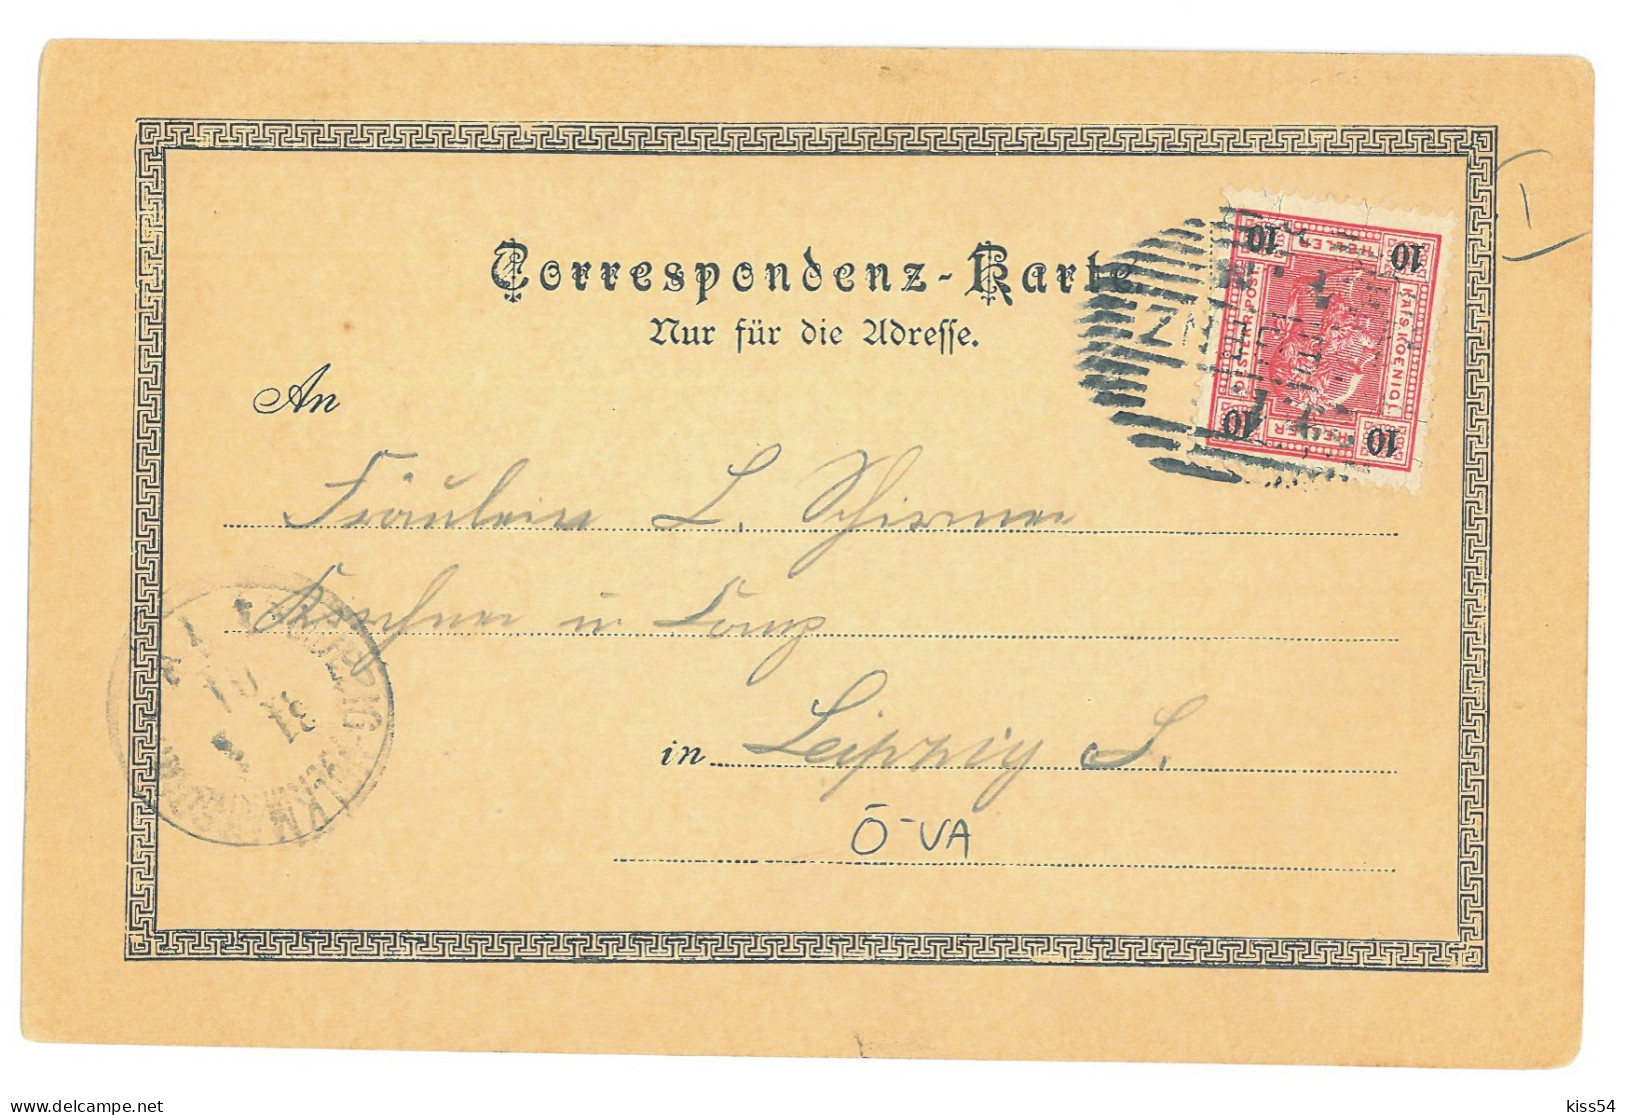 AUS 4 - 16833 BREGENZ, Litho, Austria - Old Postcard - Used - 1901 - Bregenz